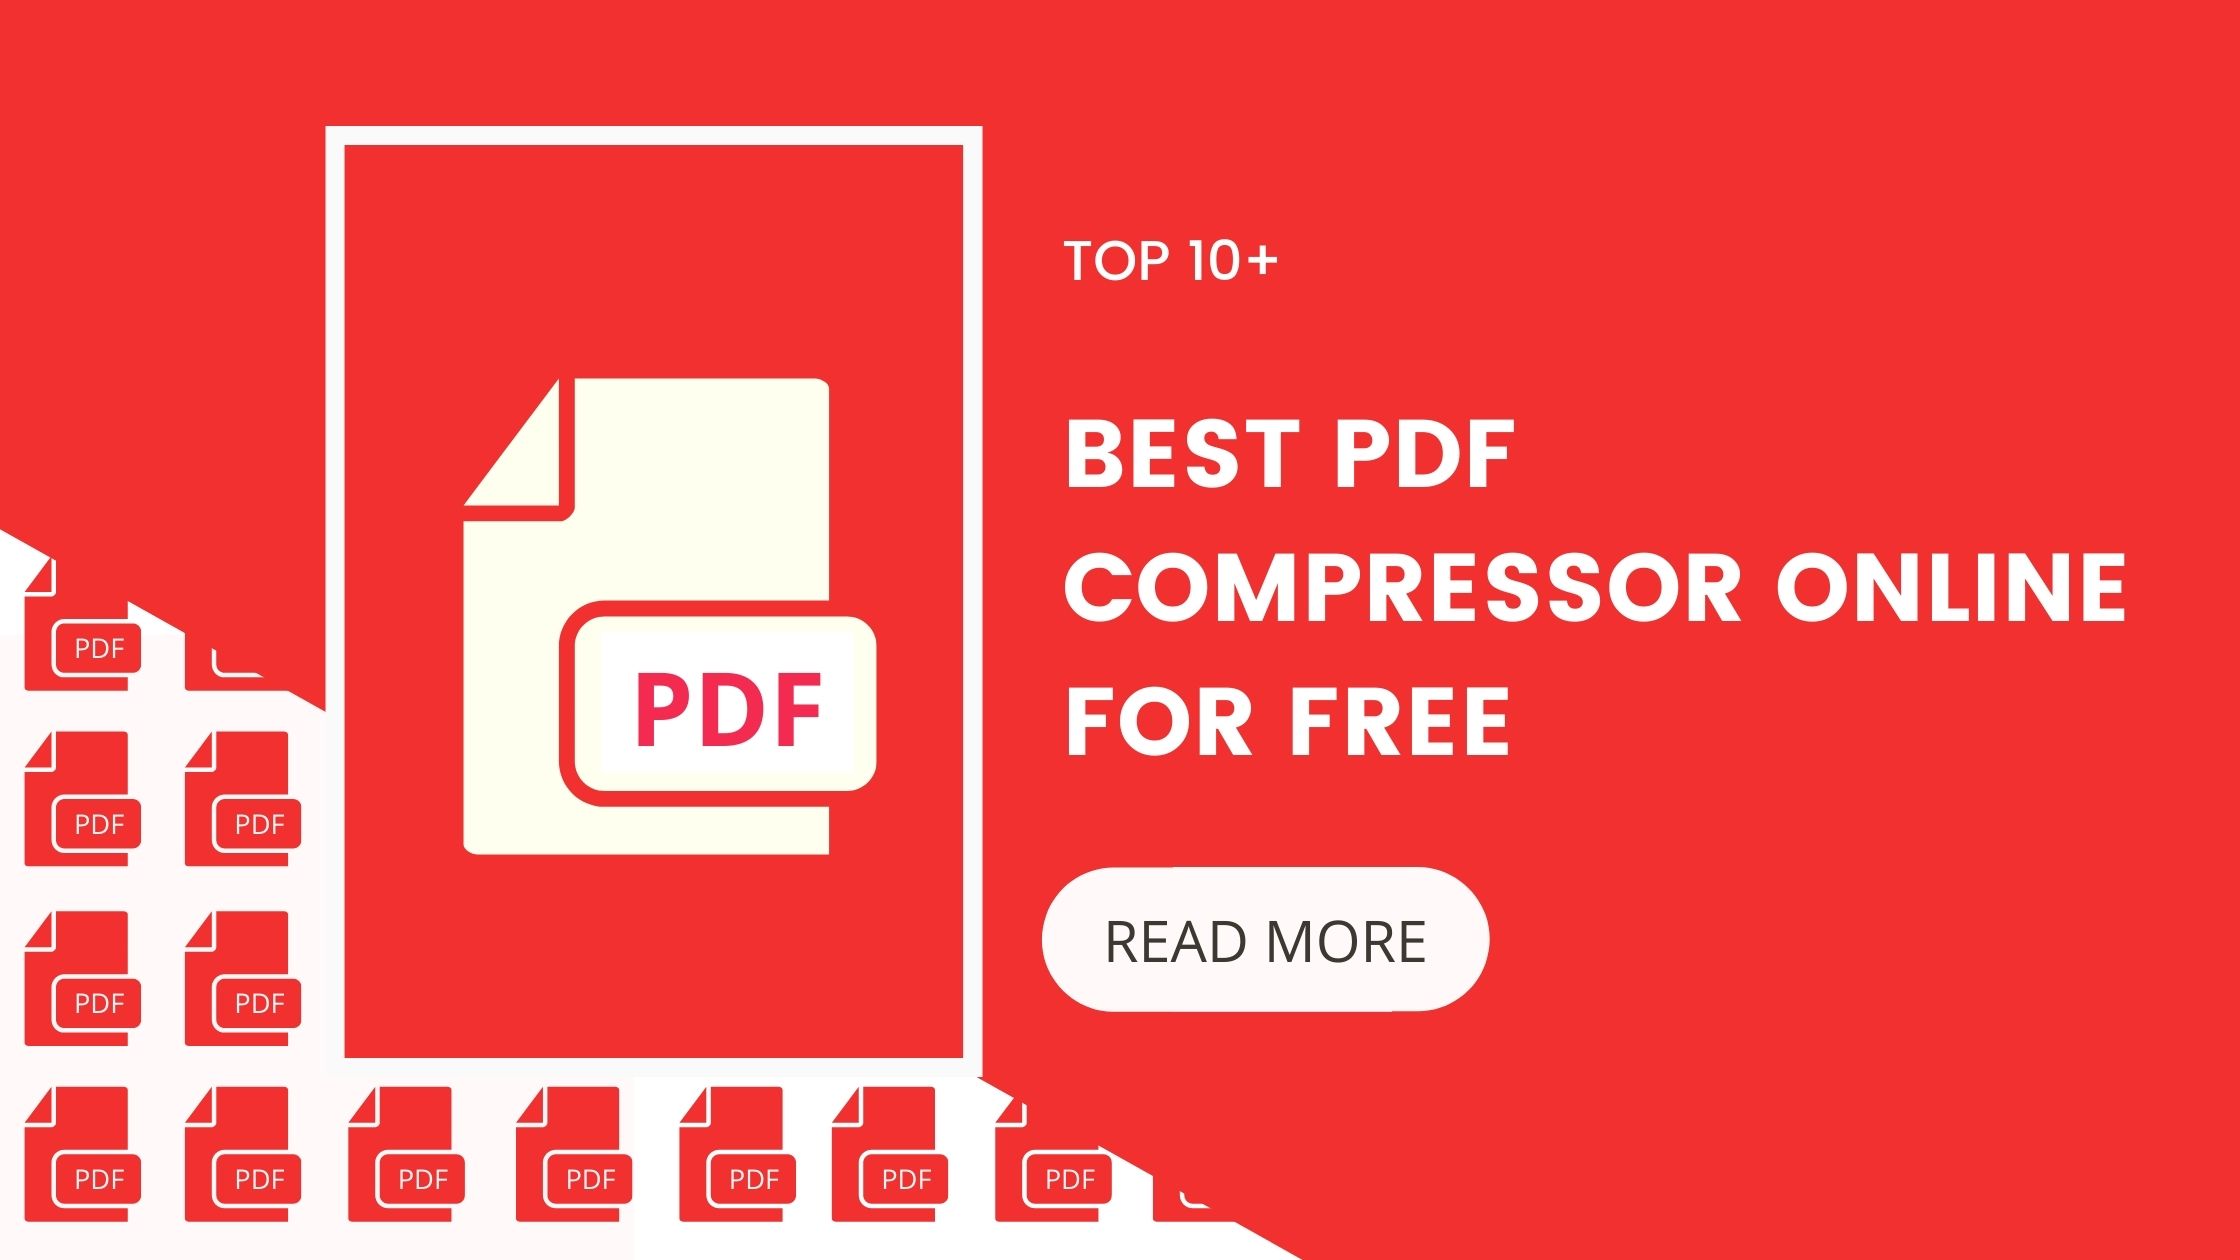 Best PDF Compressor Online